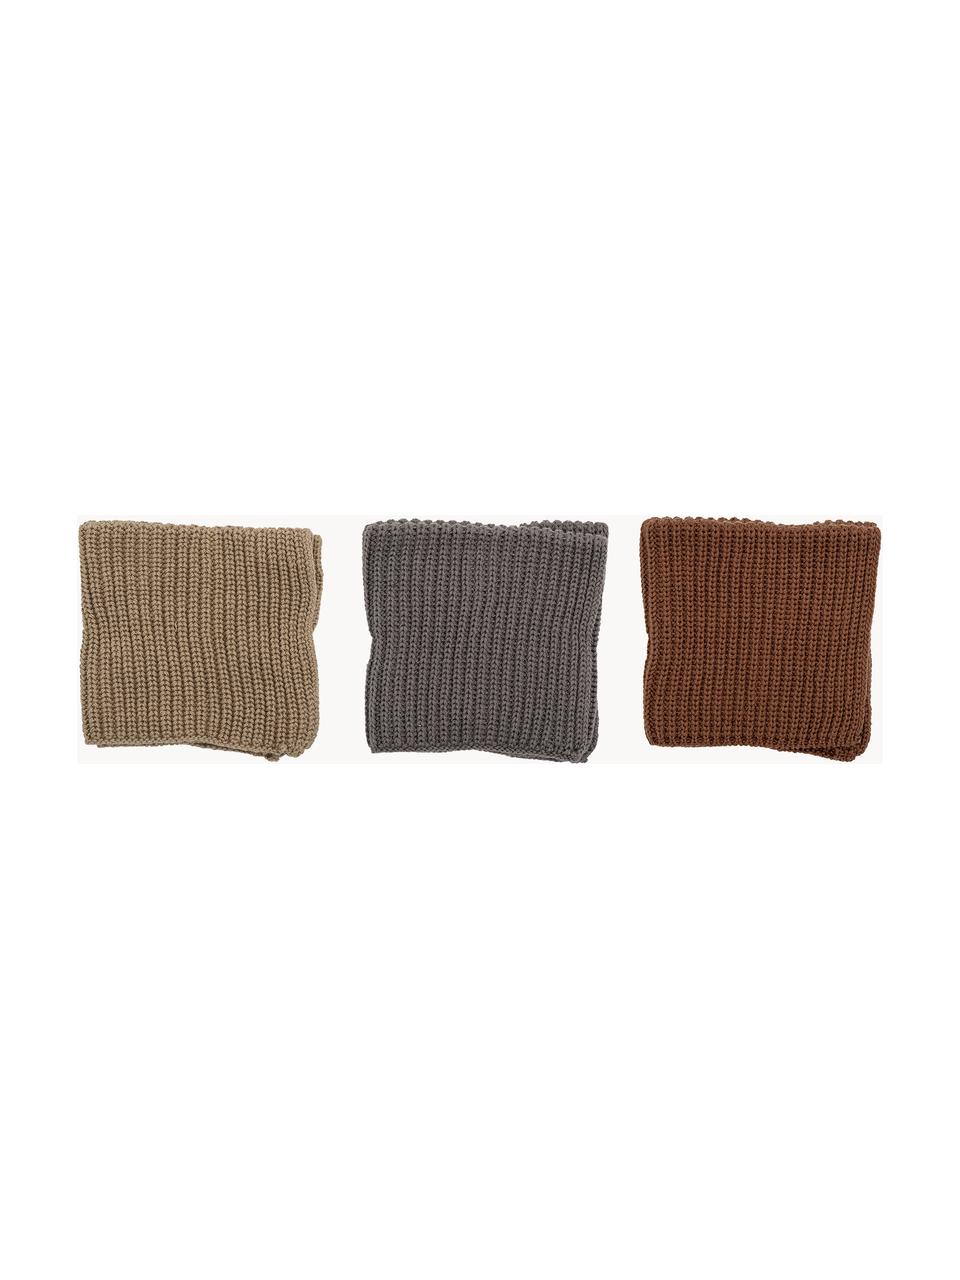 Set de paños de cocina Ninna, 3 pzas., 100% algodón, Beige, gris oscuro, marrón, An 27 x L 27 cm